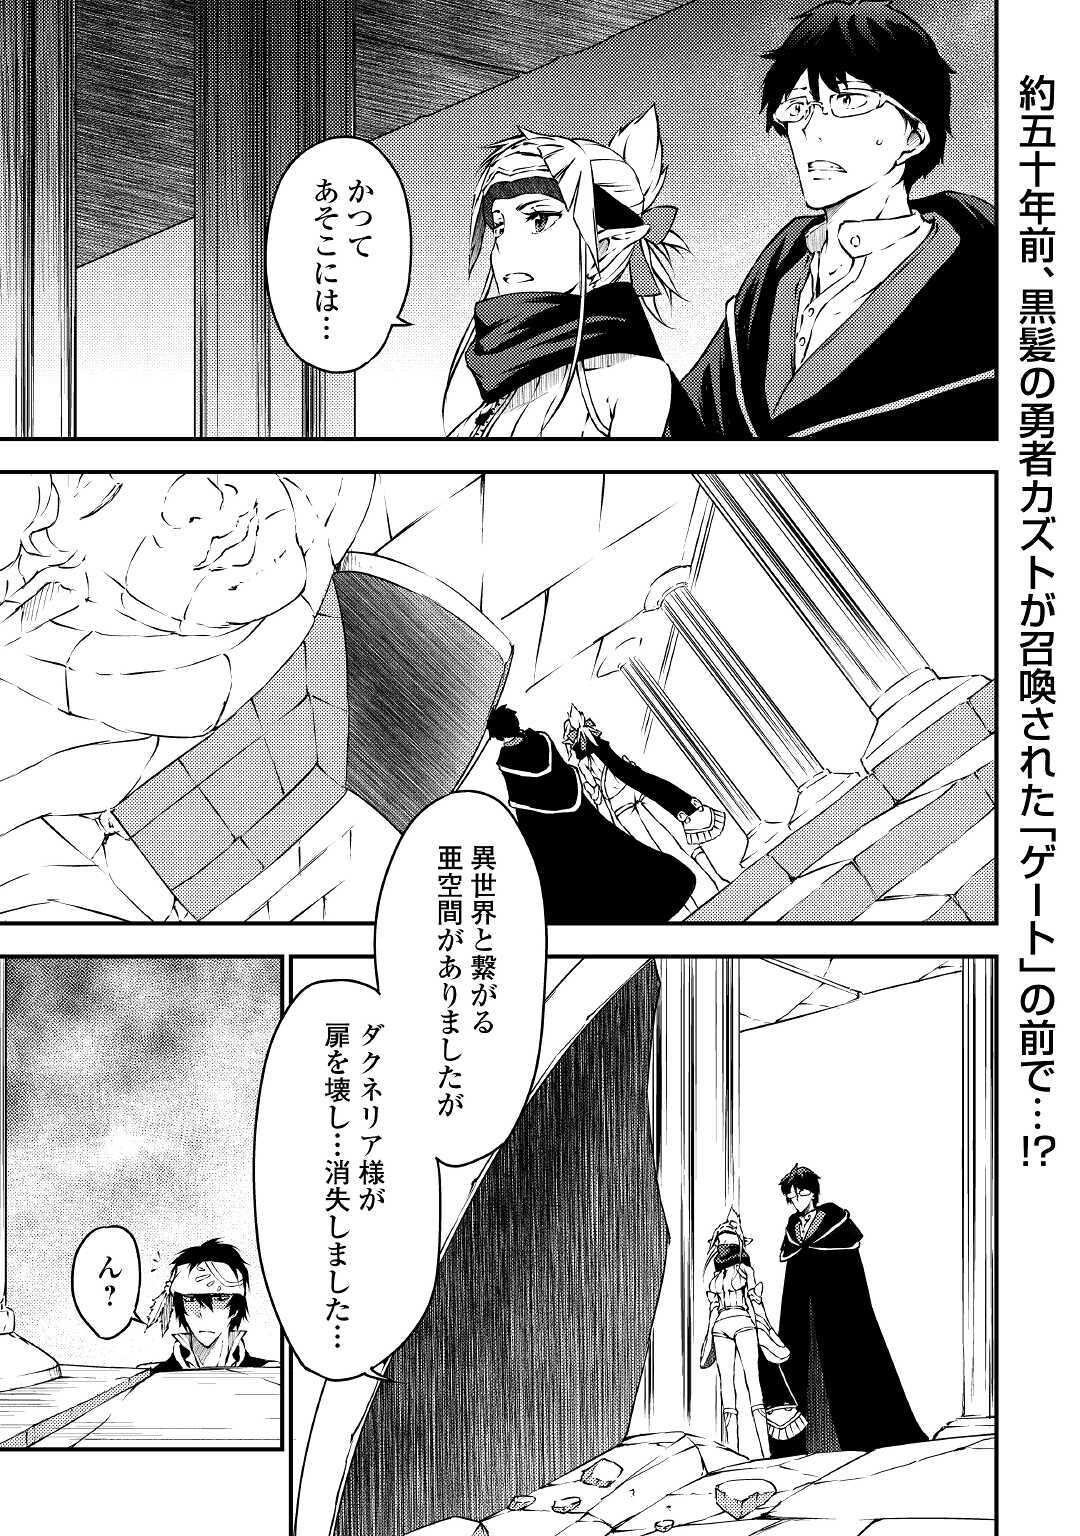 Yuusha no Mago to Maou no Musume - Chapter 27 - Page 1